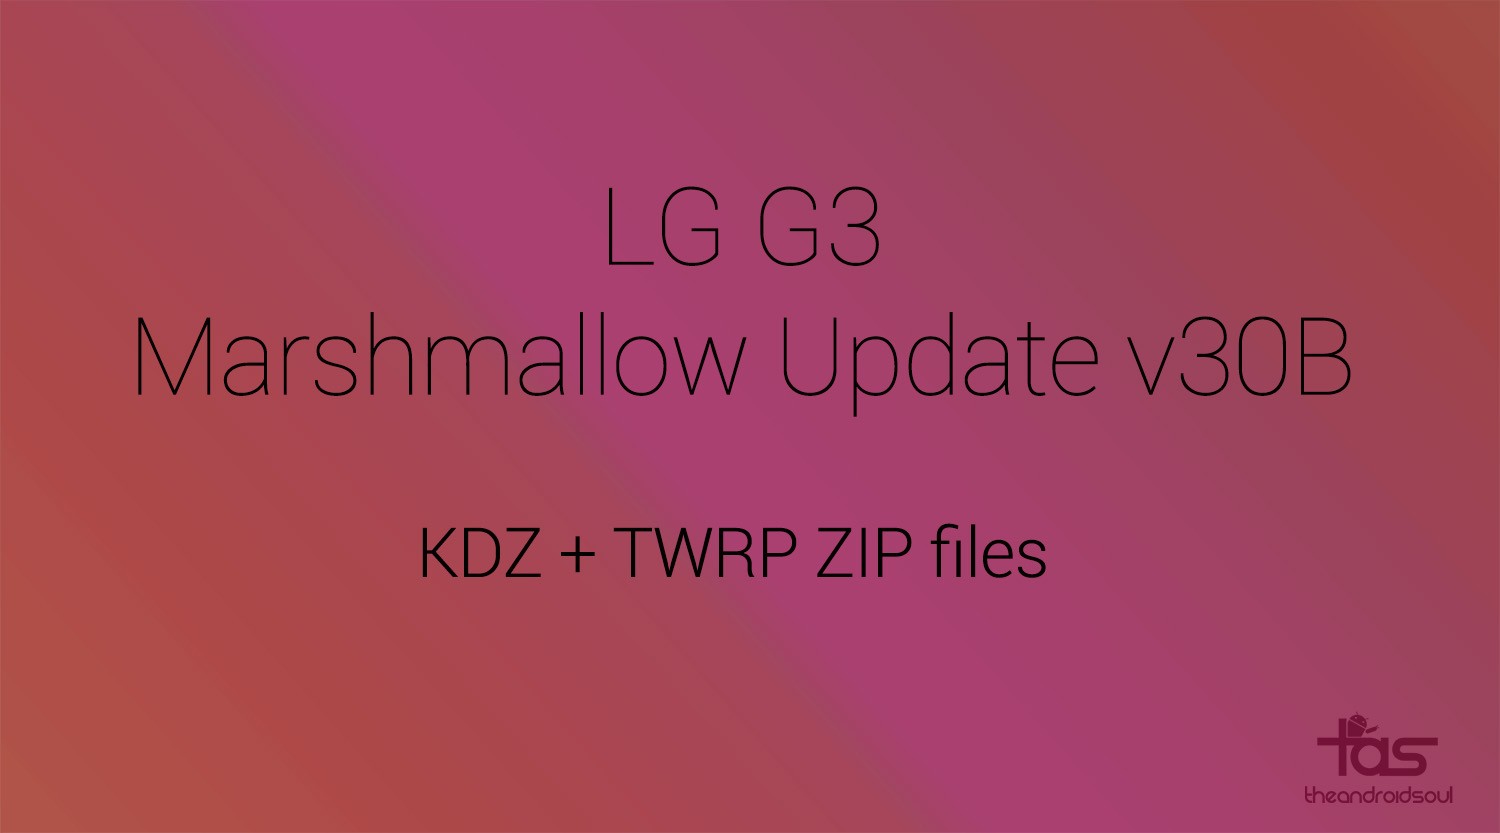 Descargue los archivos ZIP LG G3 Marshmallow update 30B KDZ y TWRP